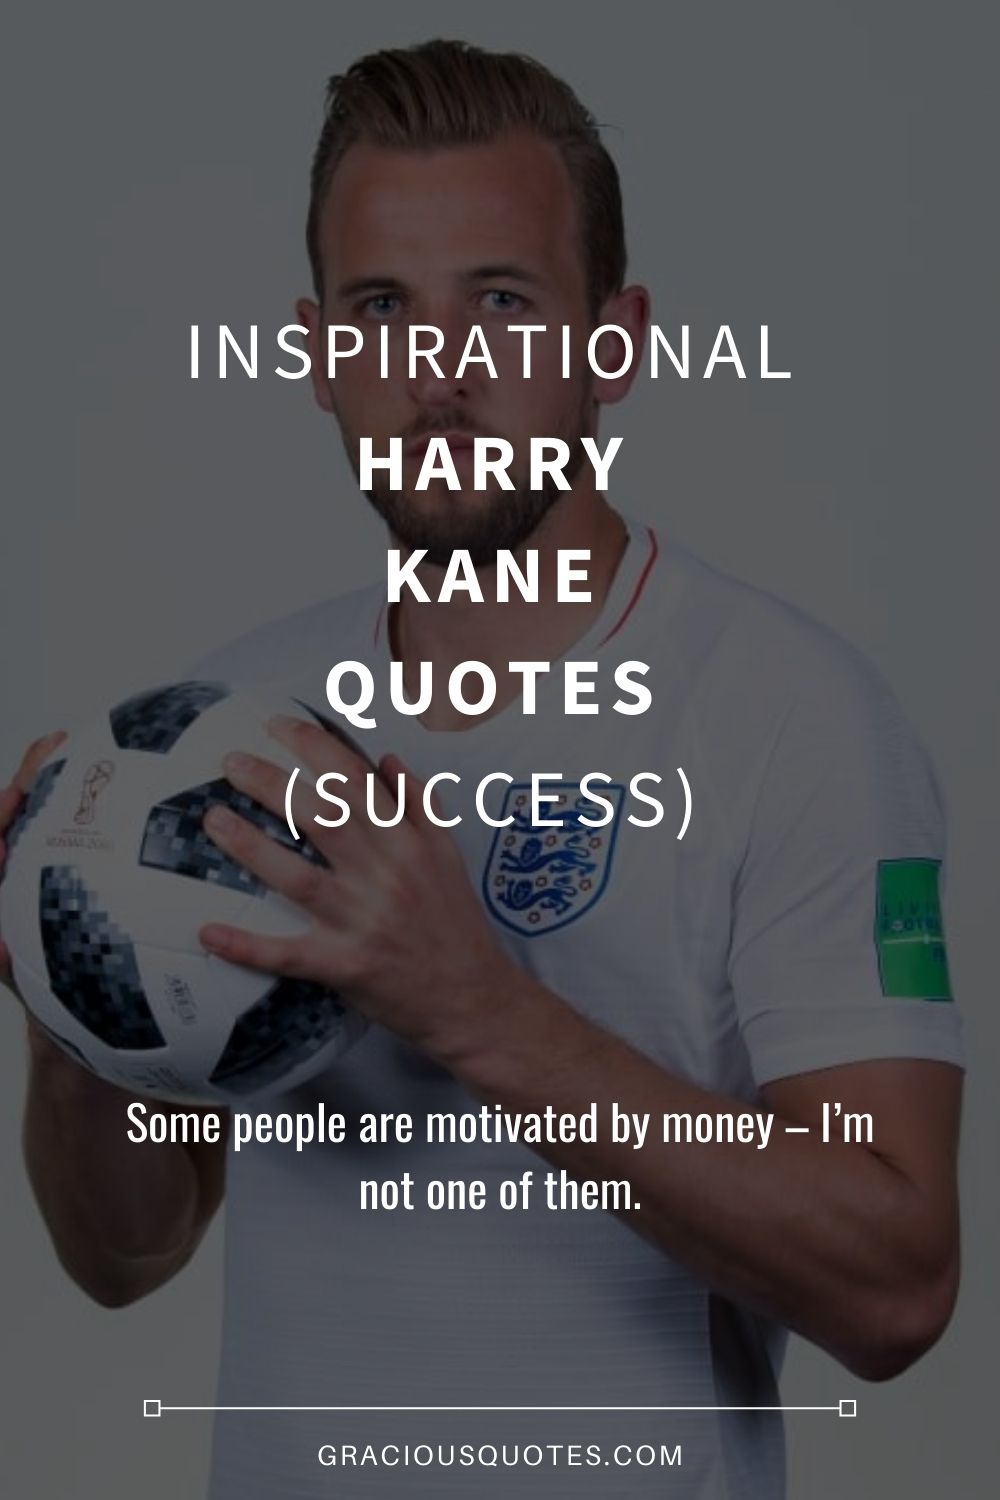 Inspirational Harry Kane Quotes (SUCCESS) - Gracious Quotes